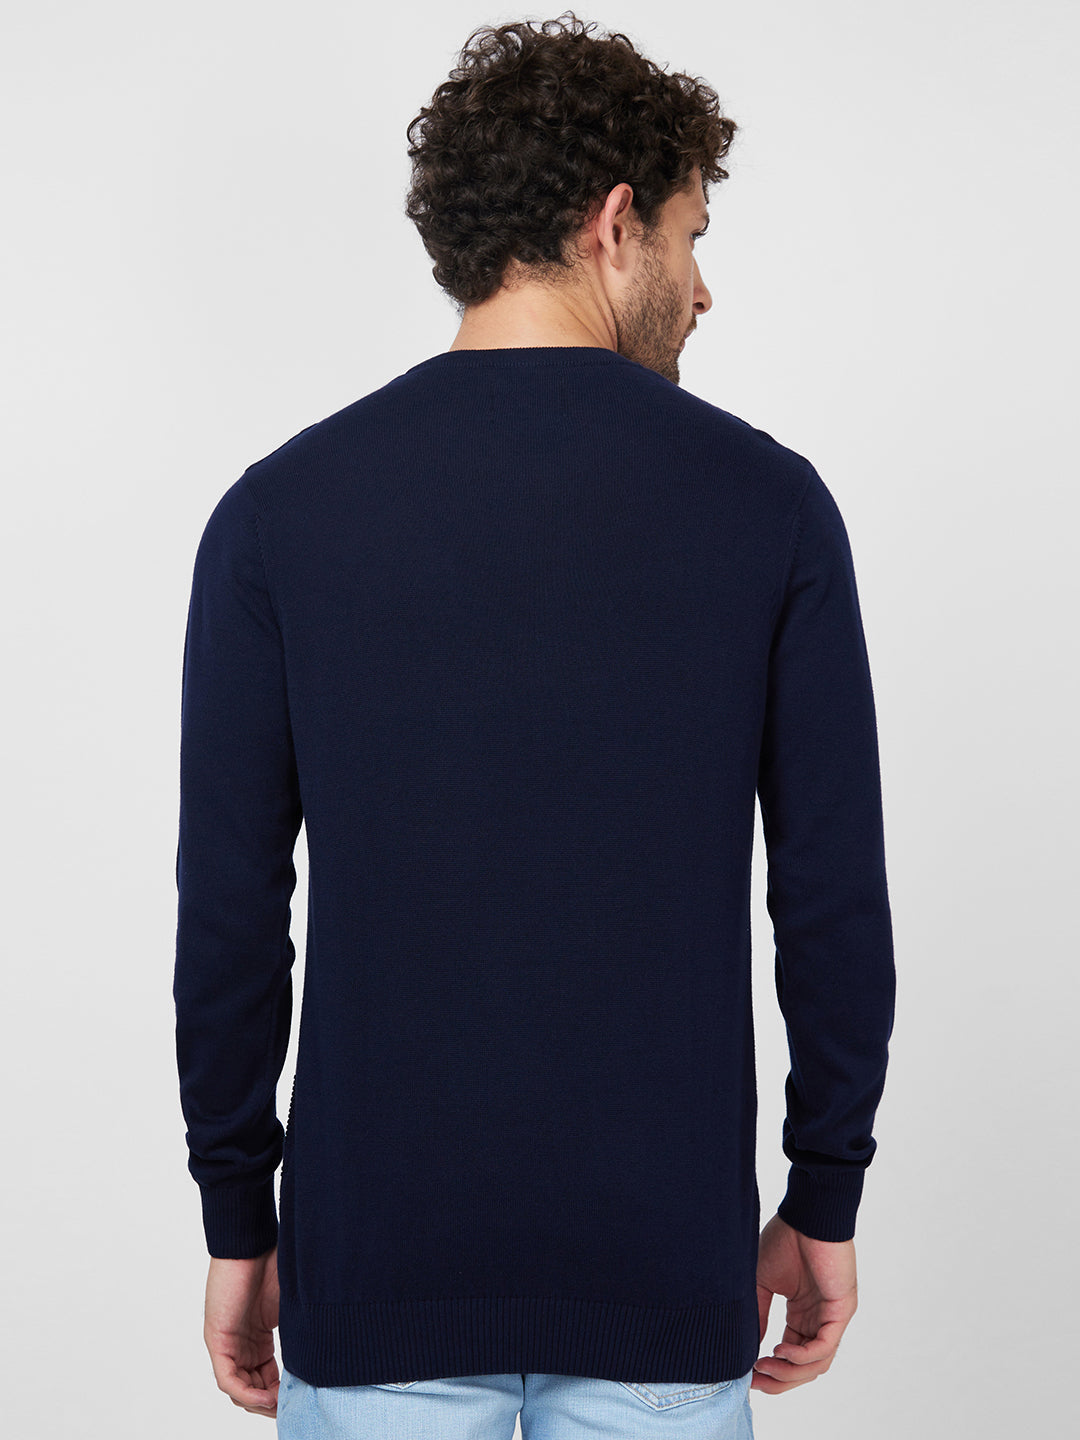 Spykar Full Sleeve Round Neck Blue Cotton Sweater For Men